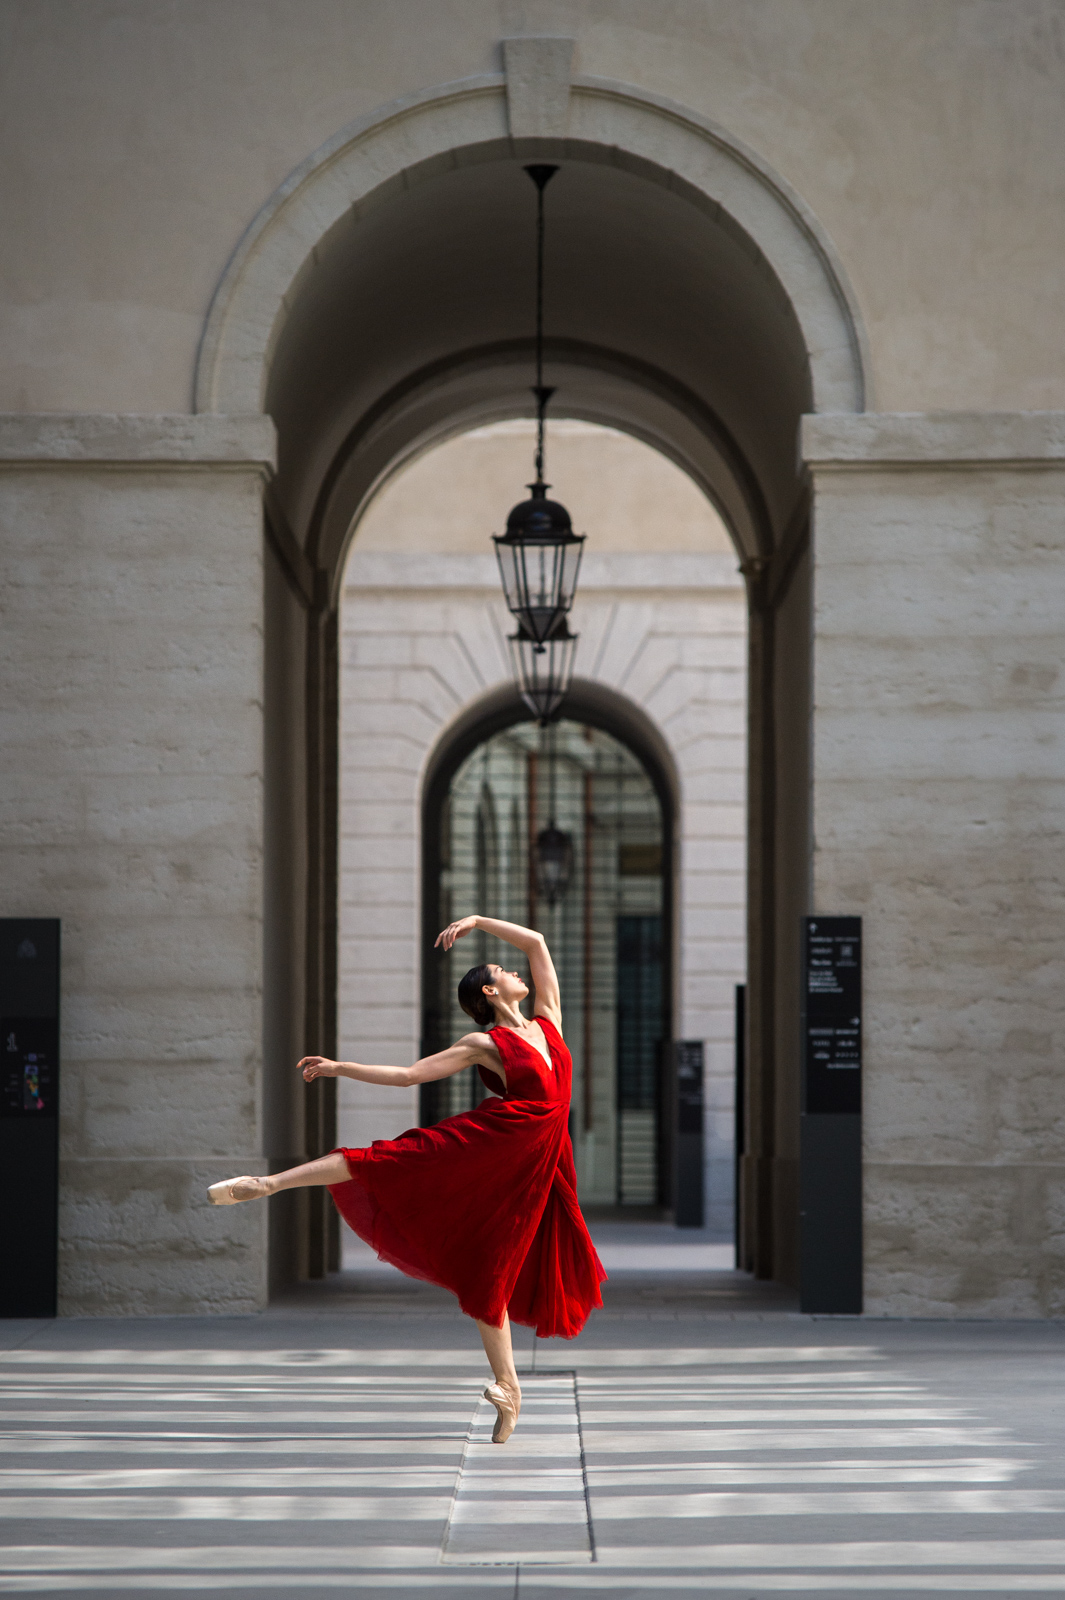 Dance in Lyon" : quand la danse s'empare de la rue - Lyon Capitale